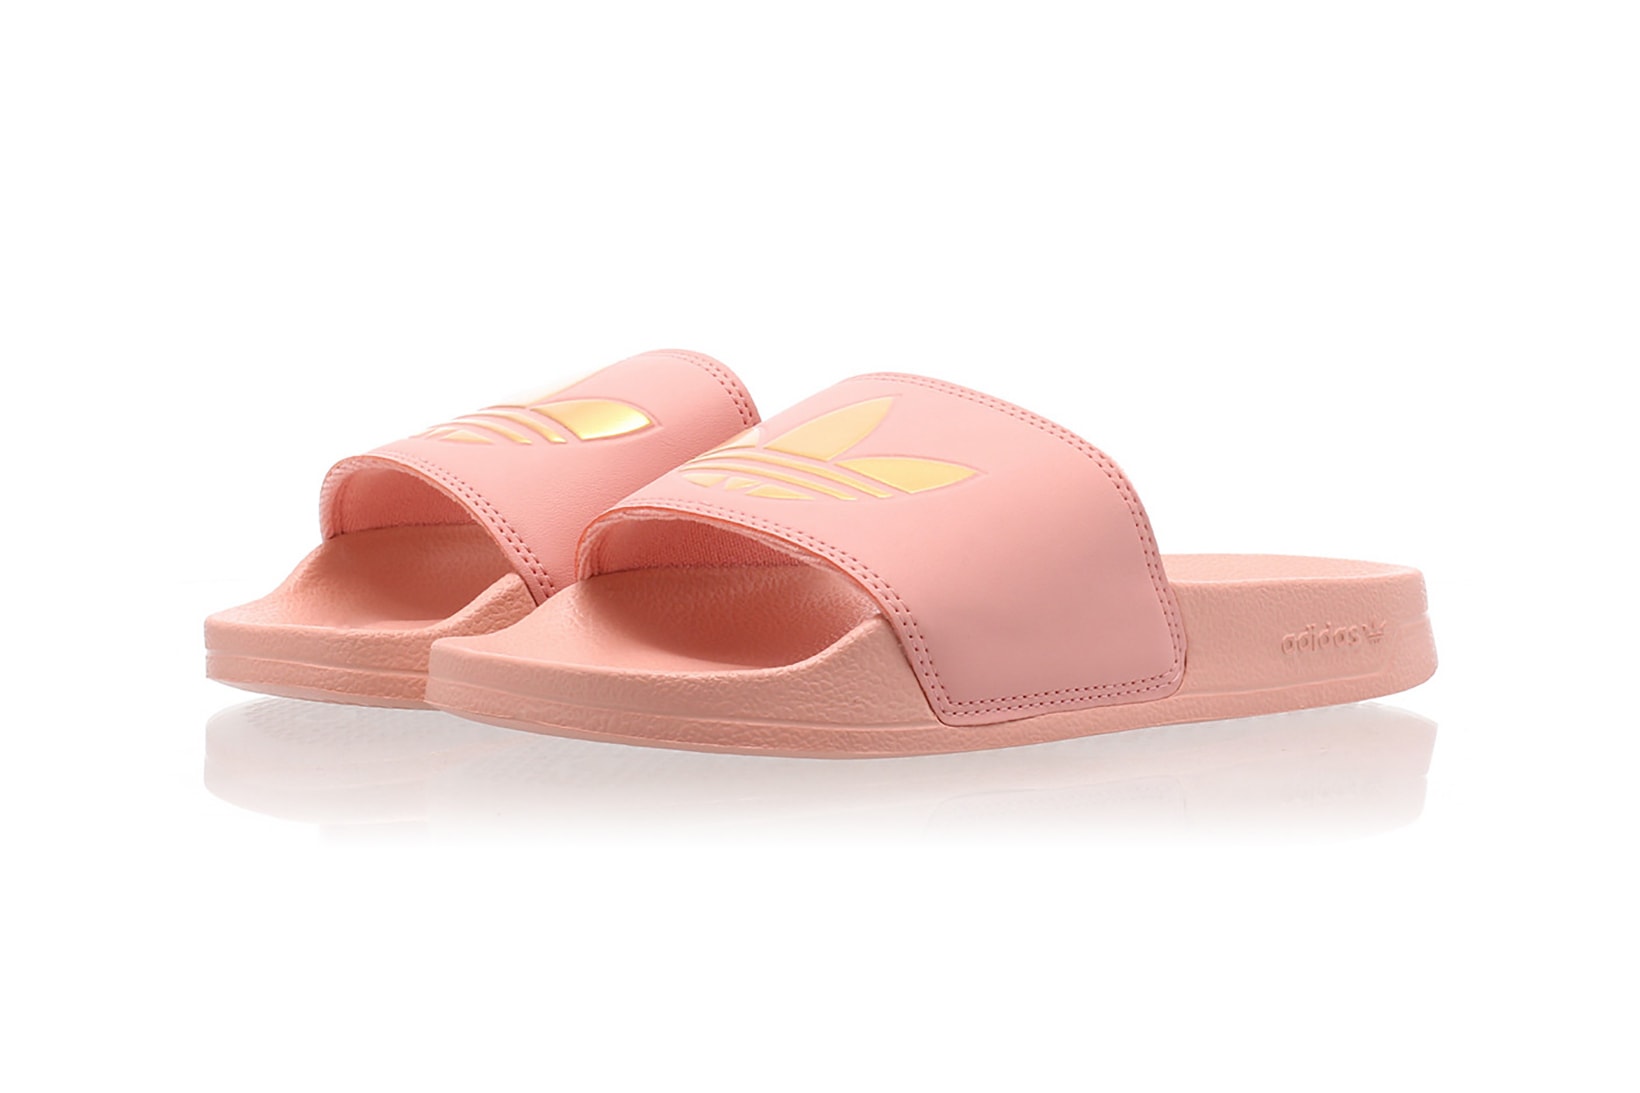 adidas adilette lite slides slippers pink cream white gray footwear